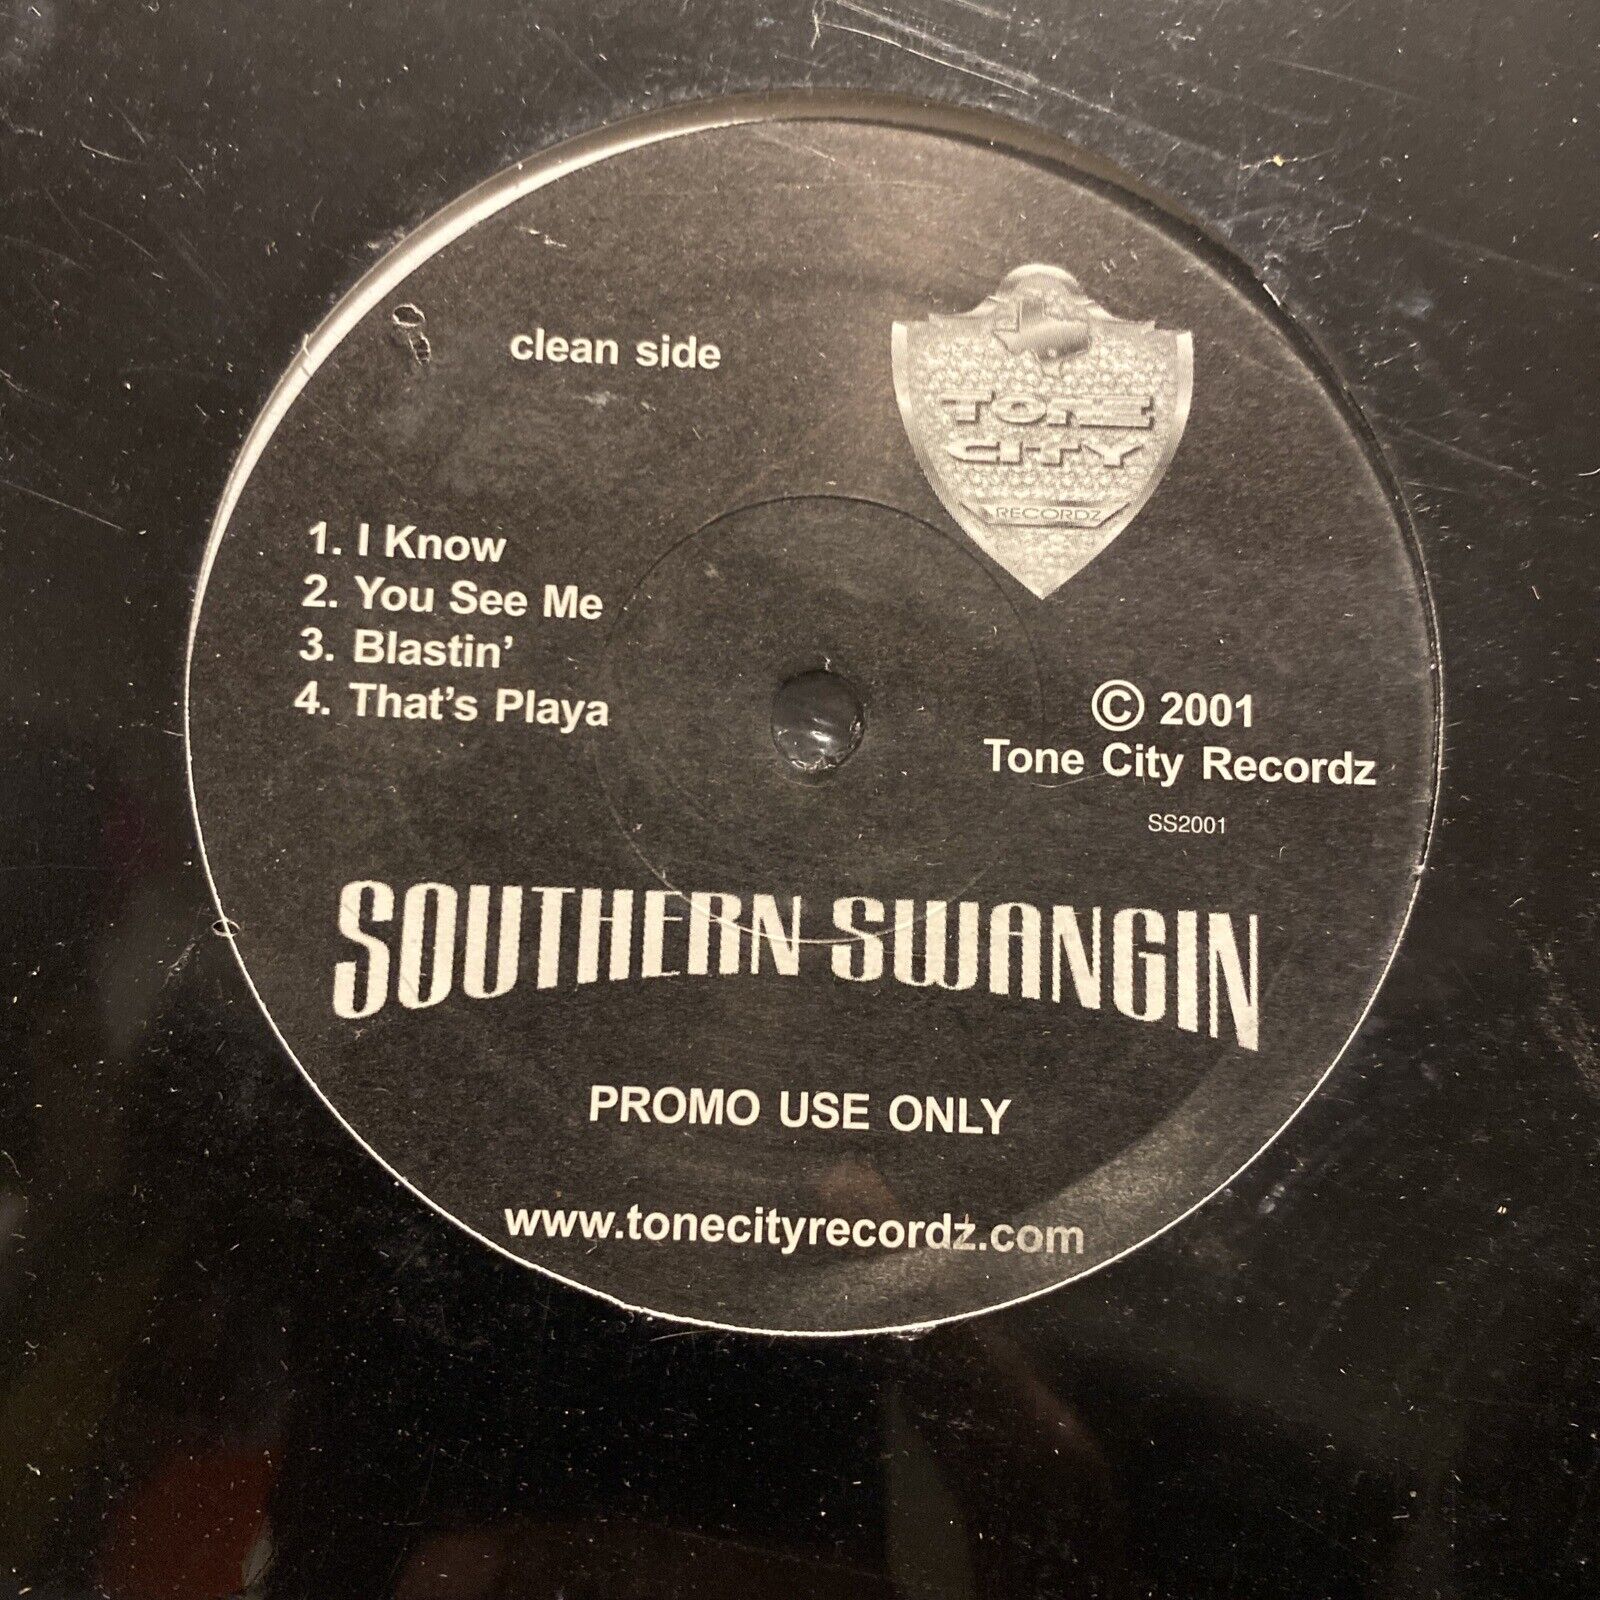 RARE LATIN GANGSTA RAP / Tone City Recordz Southern Swangin 2001 SEALED PROMO LP